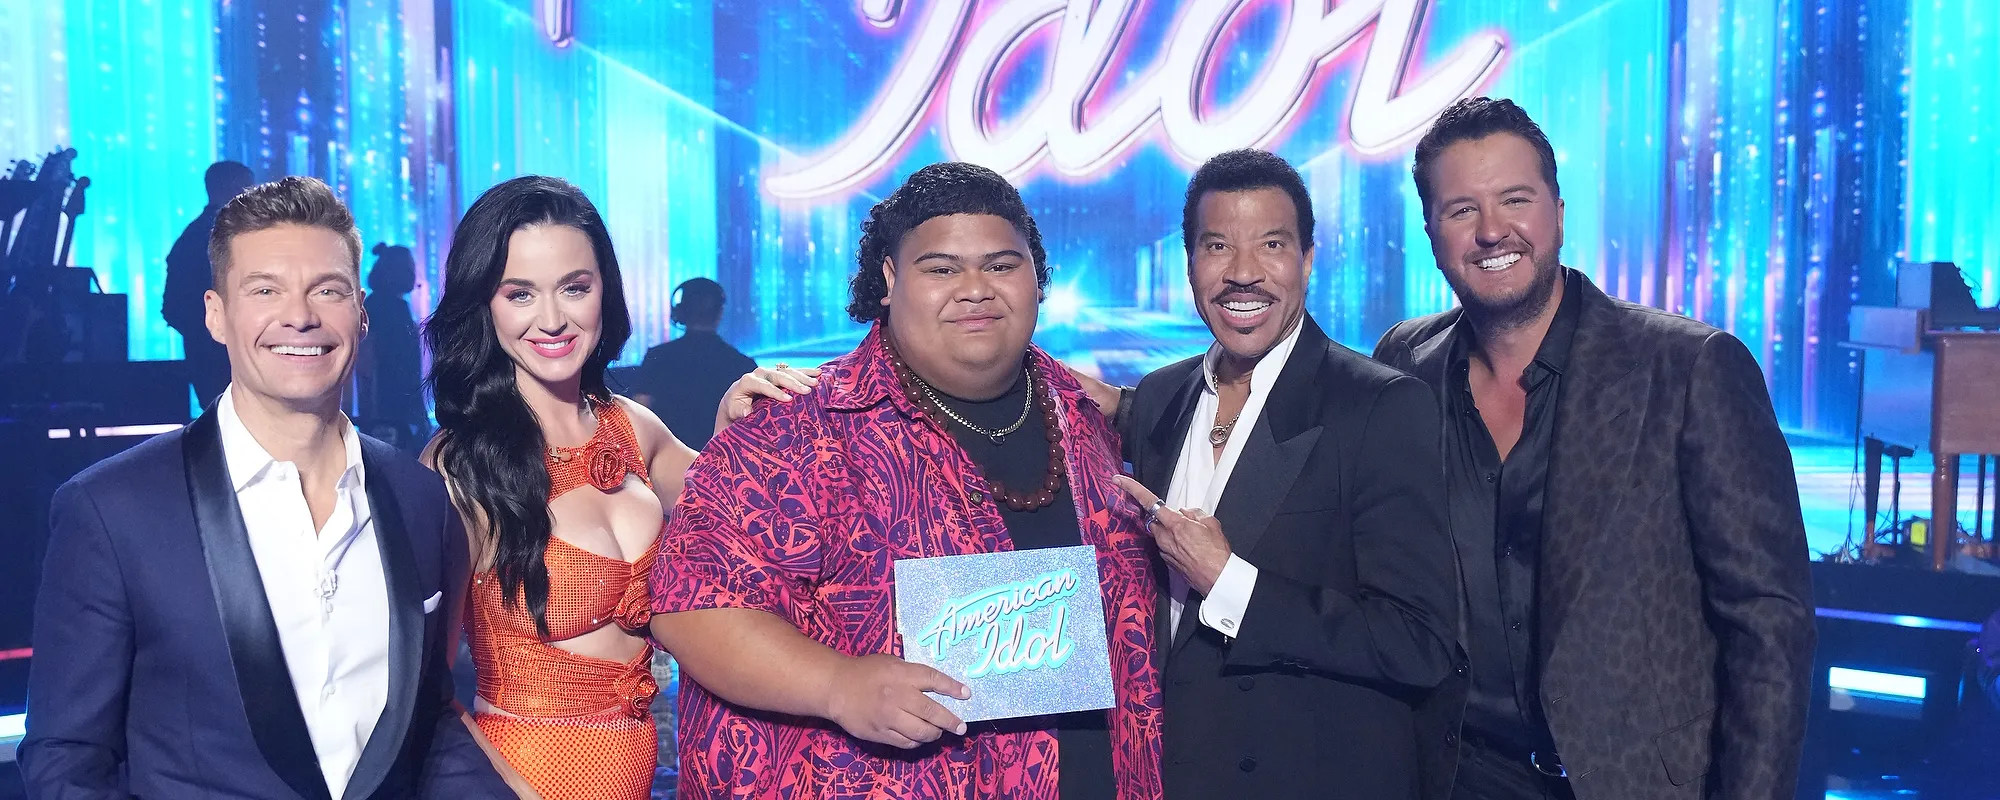 Iam Tongi Reveals the Best Advice He Got on ‘American Idol’